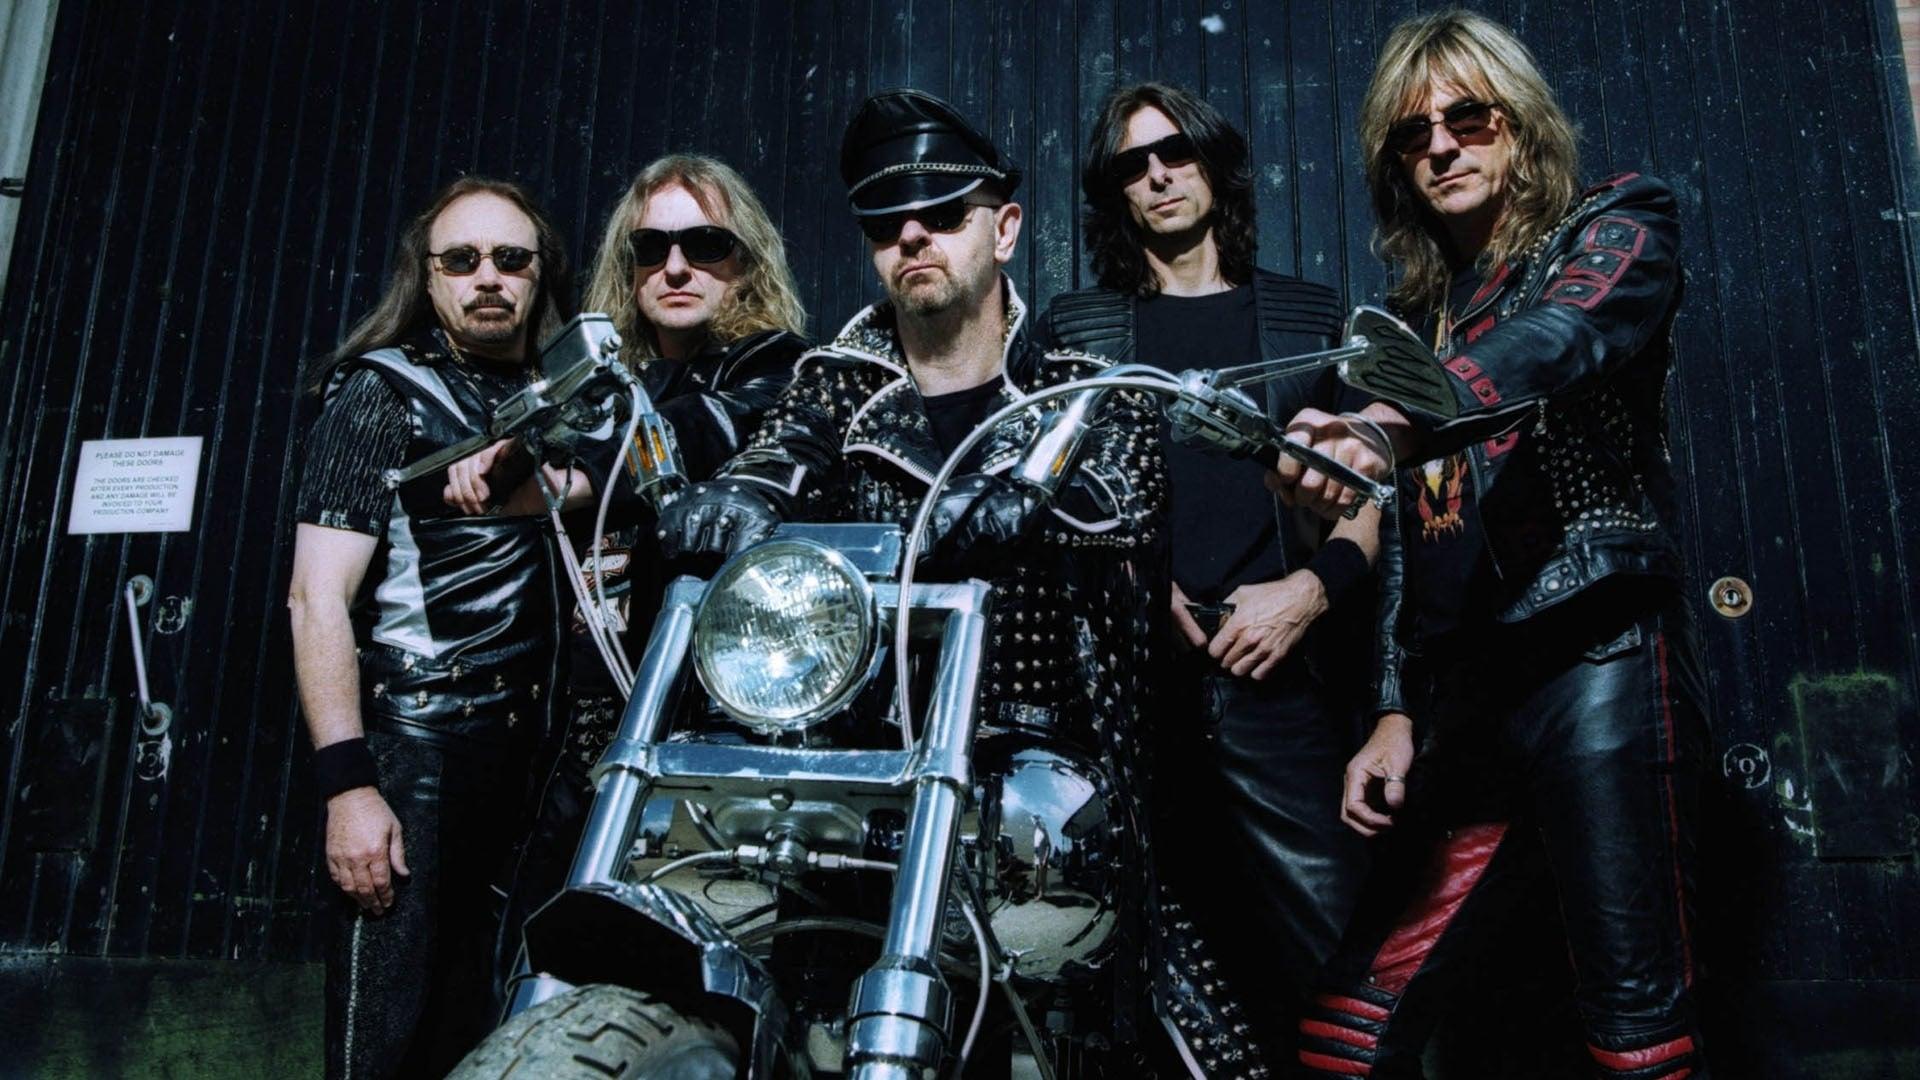 Judas Priest: Killing Machine backdrop